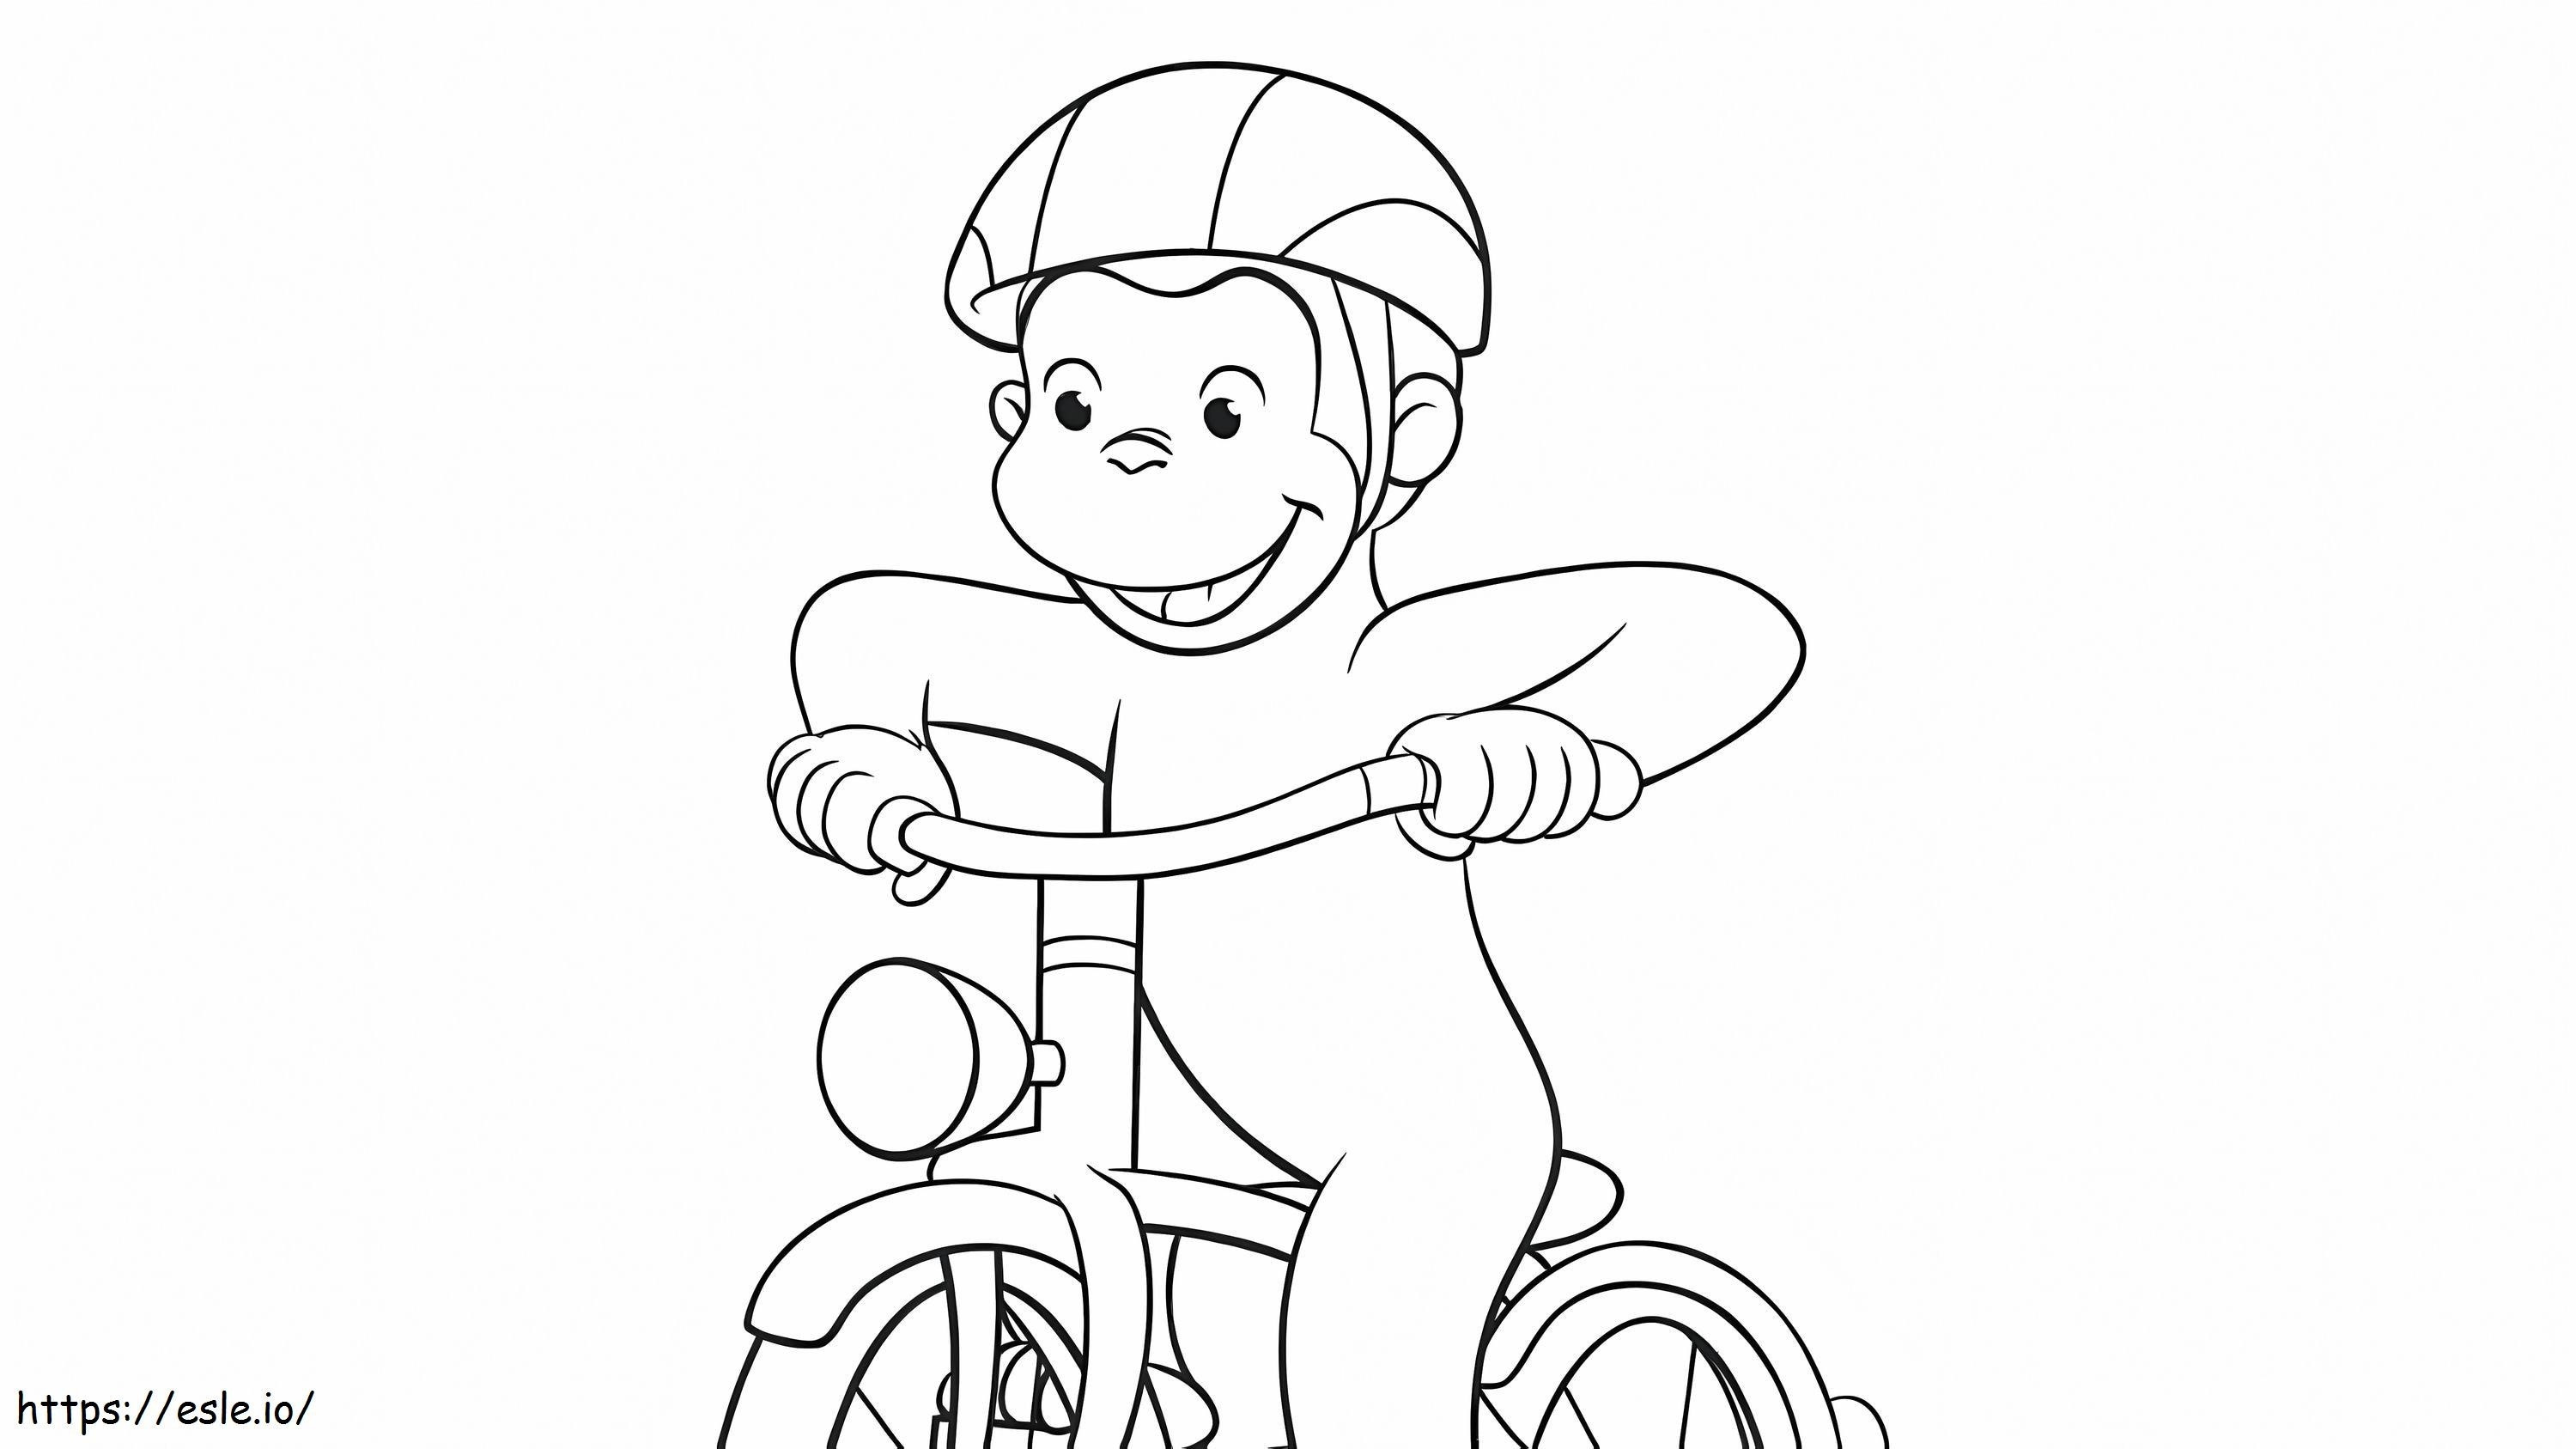 Monocyklista kolorowanka